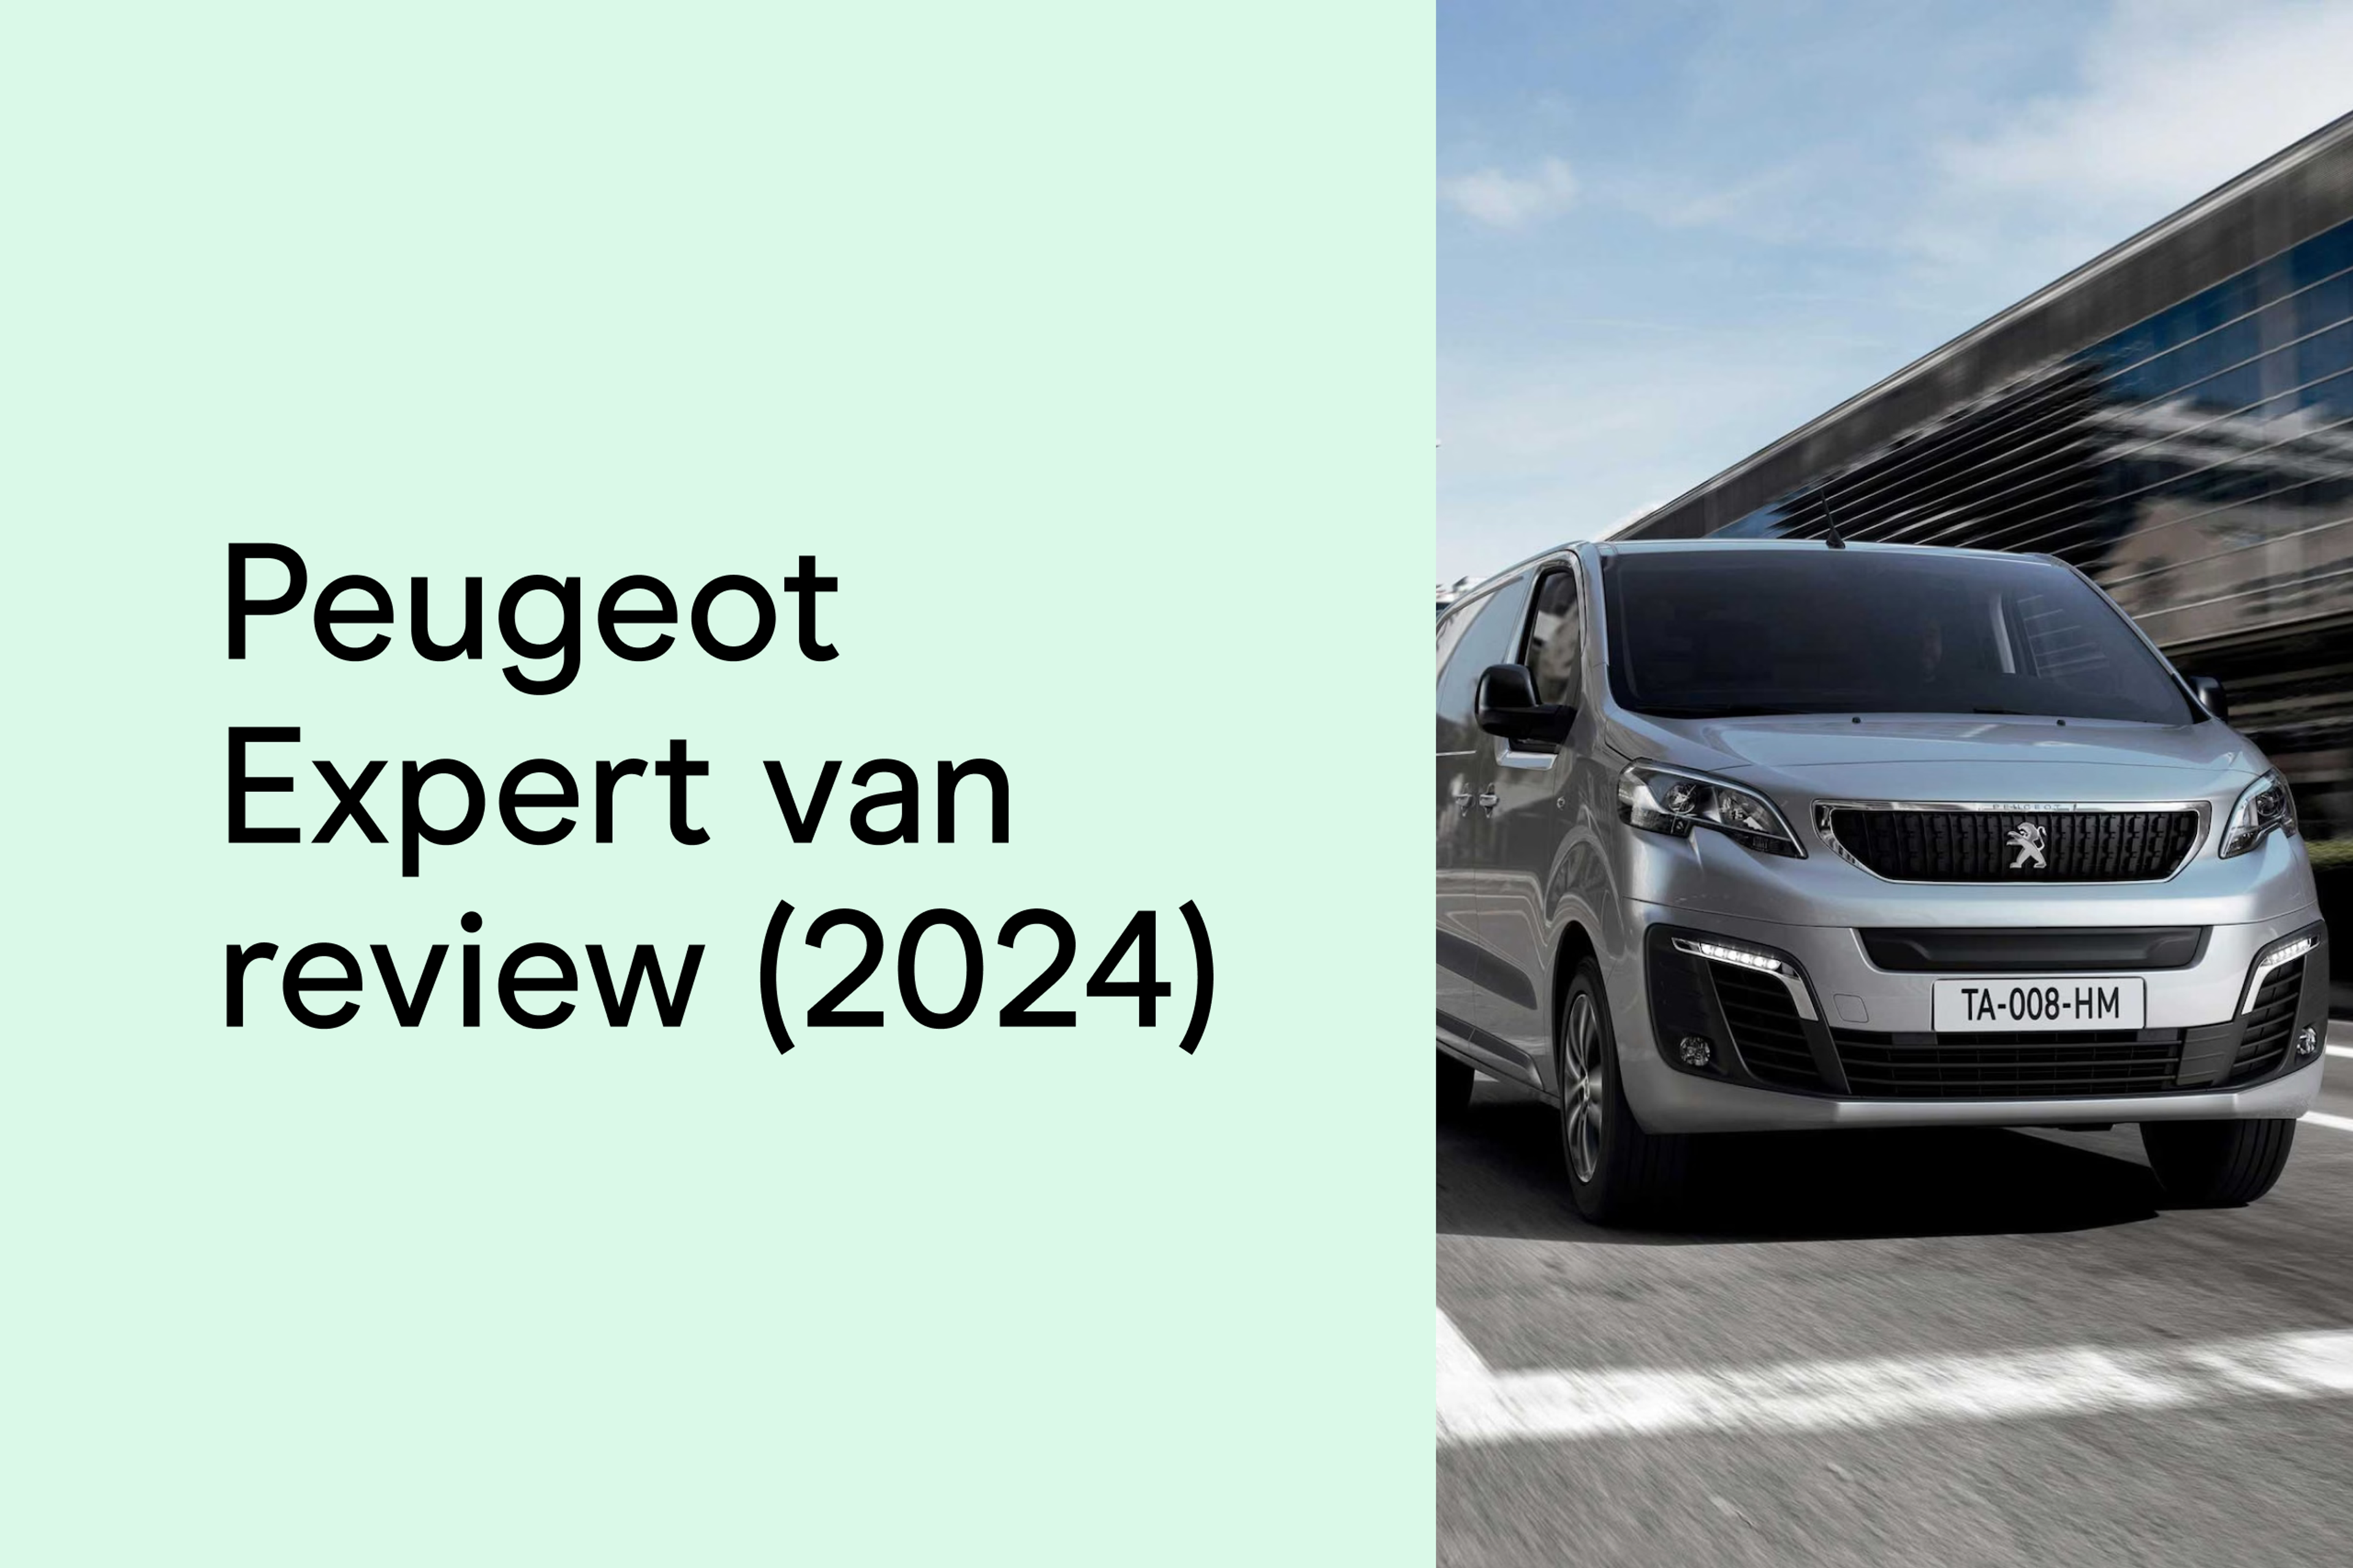 Peugeot Expert van review (2024)